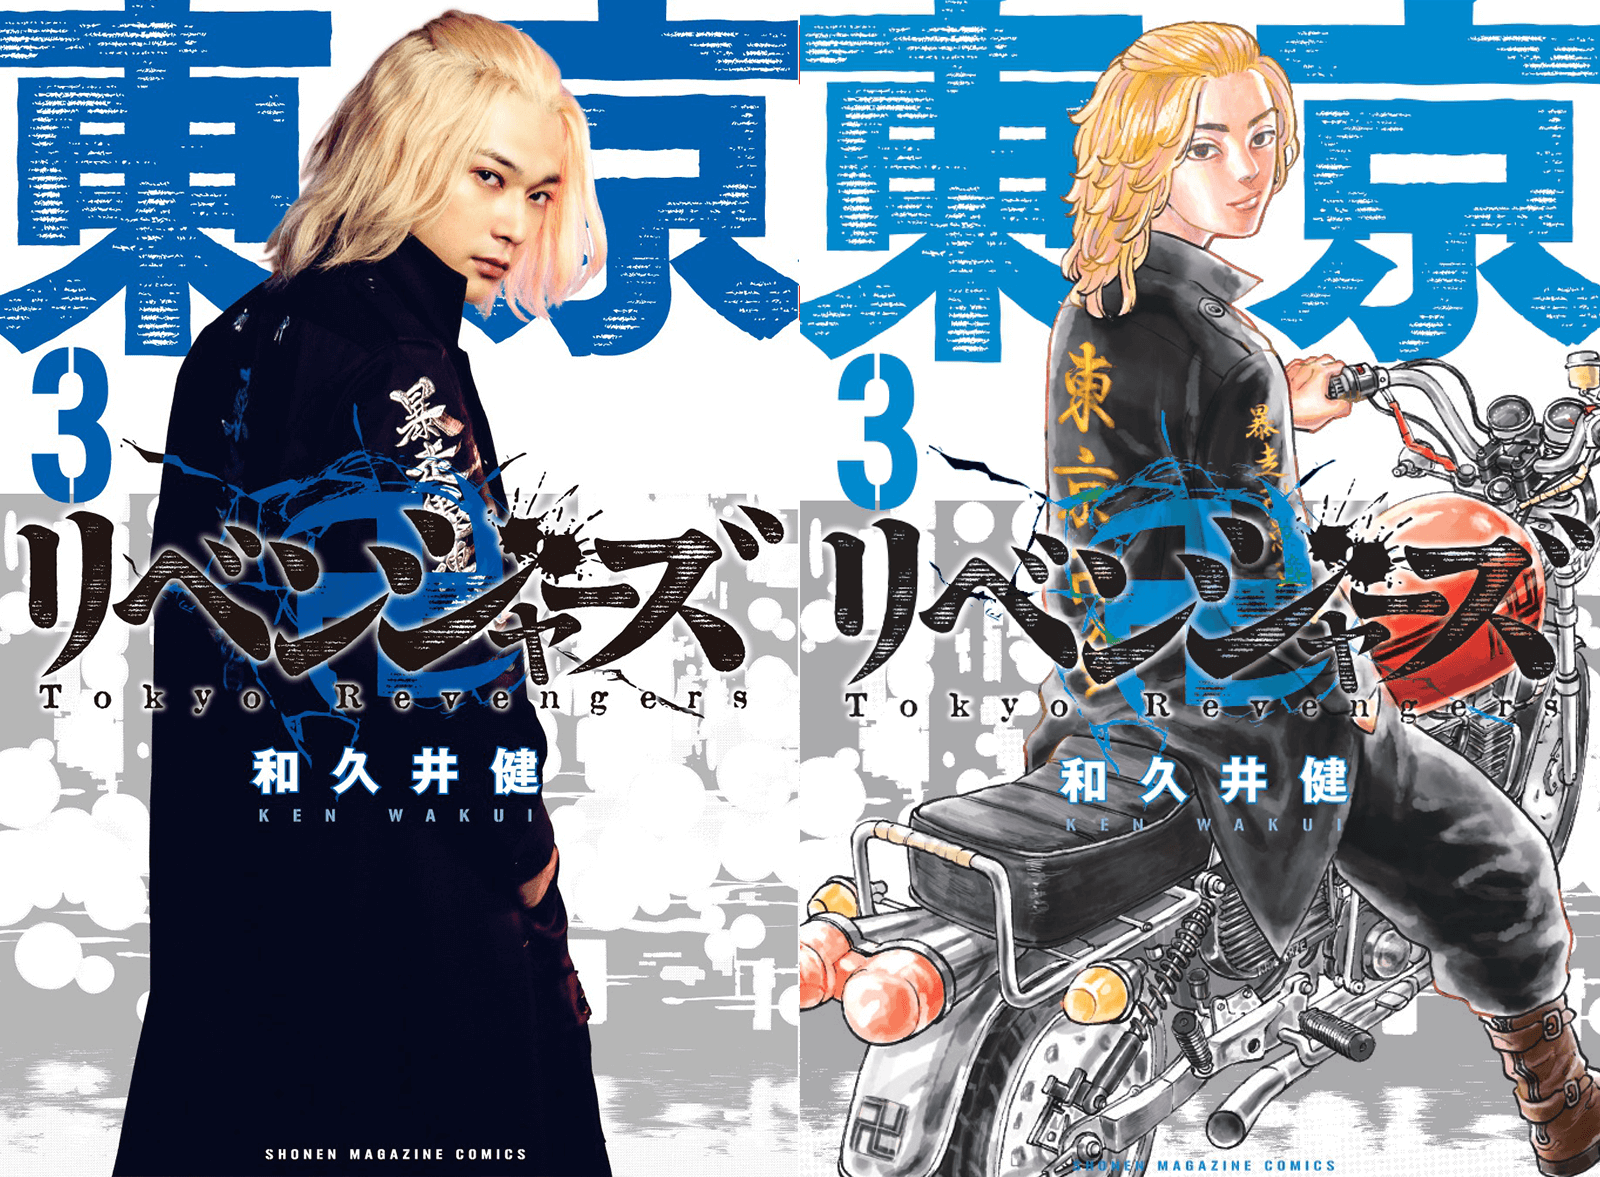 The upcoming live action manga adaptation Tokyo Revengers 2021